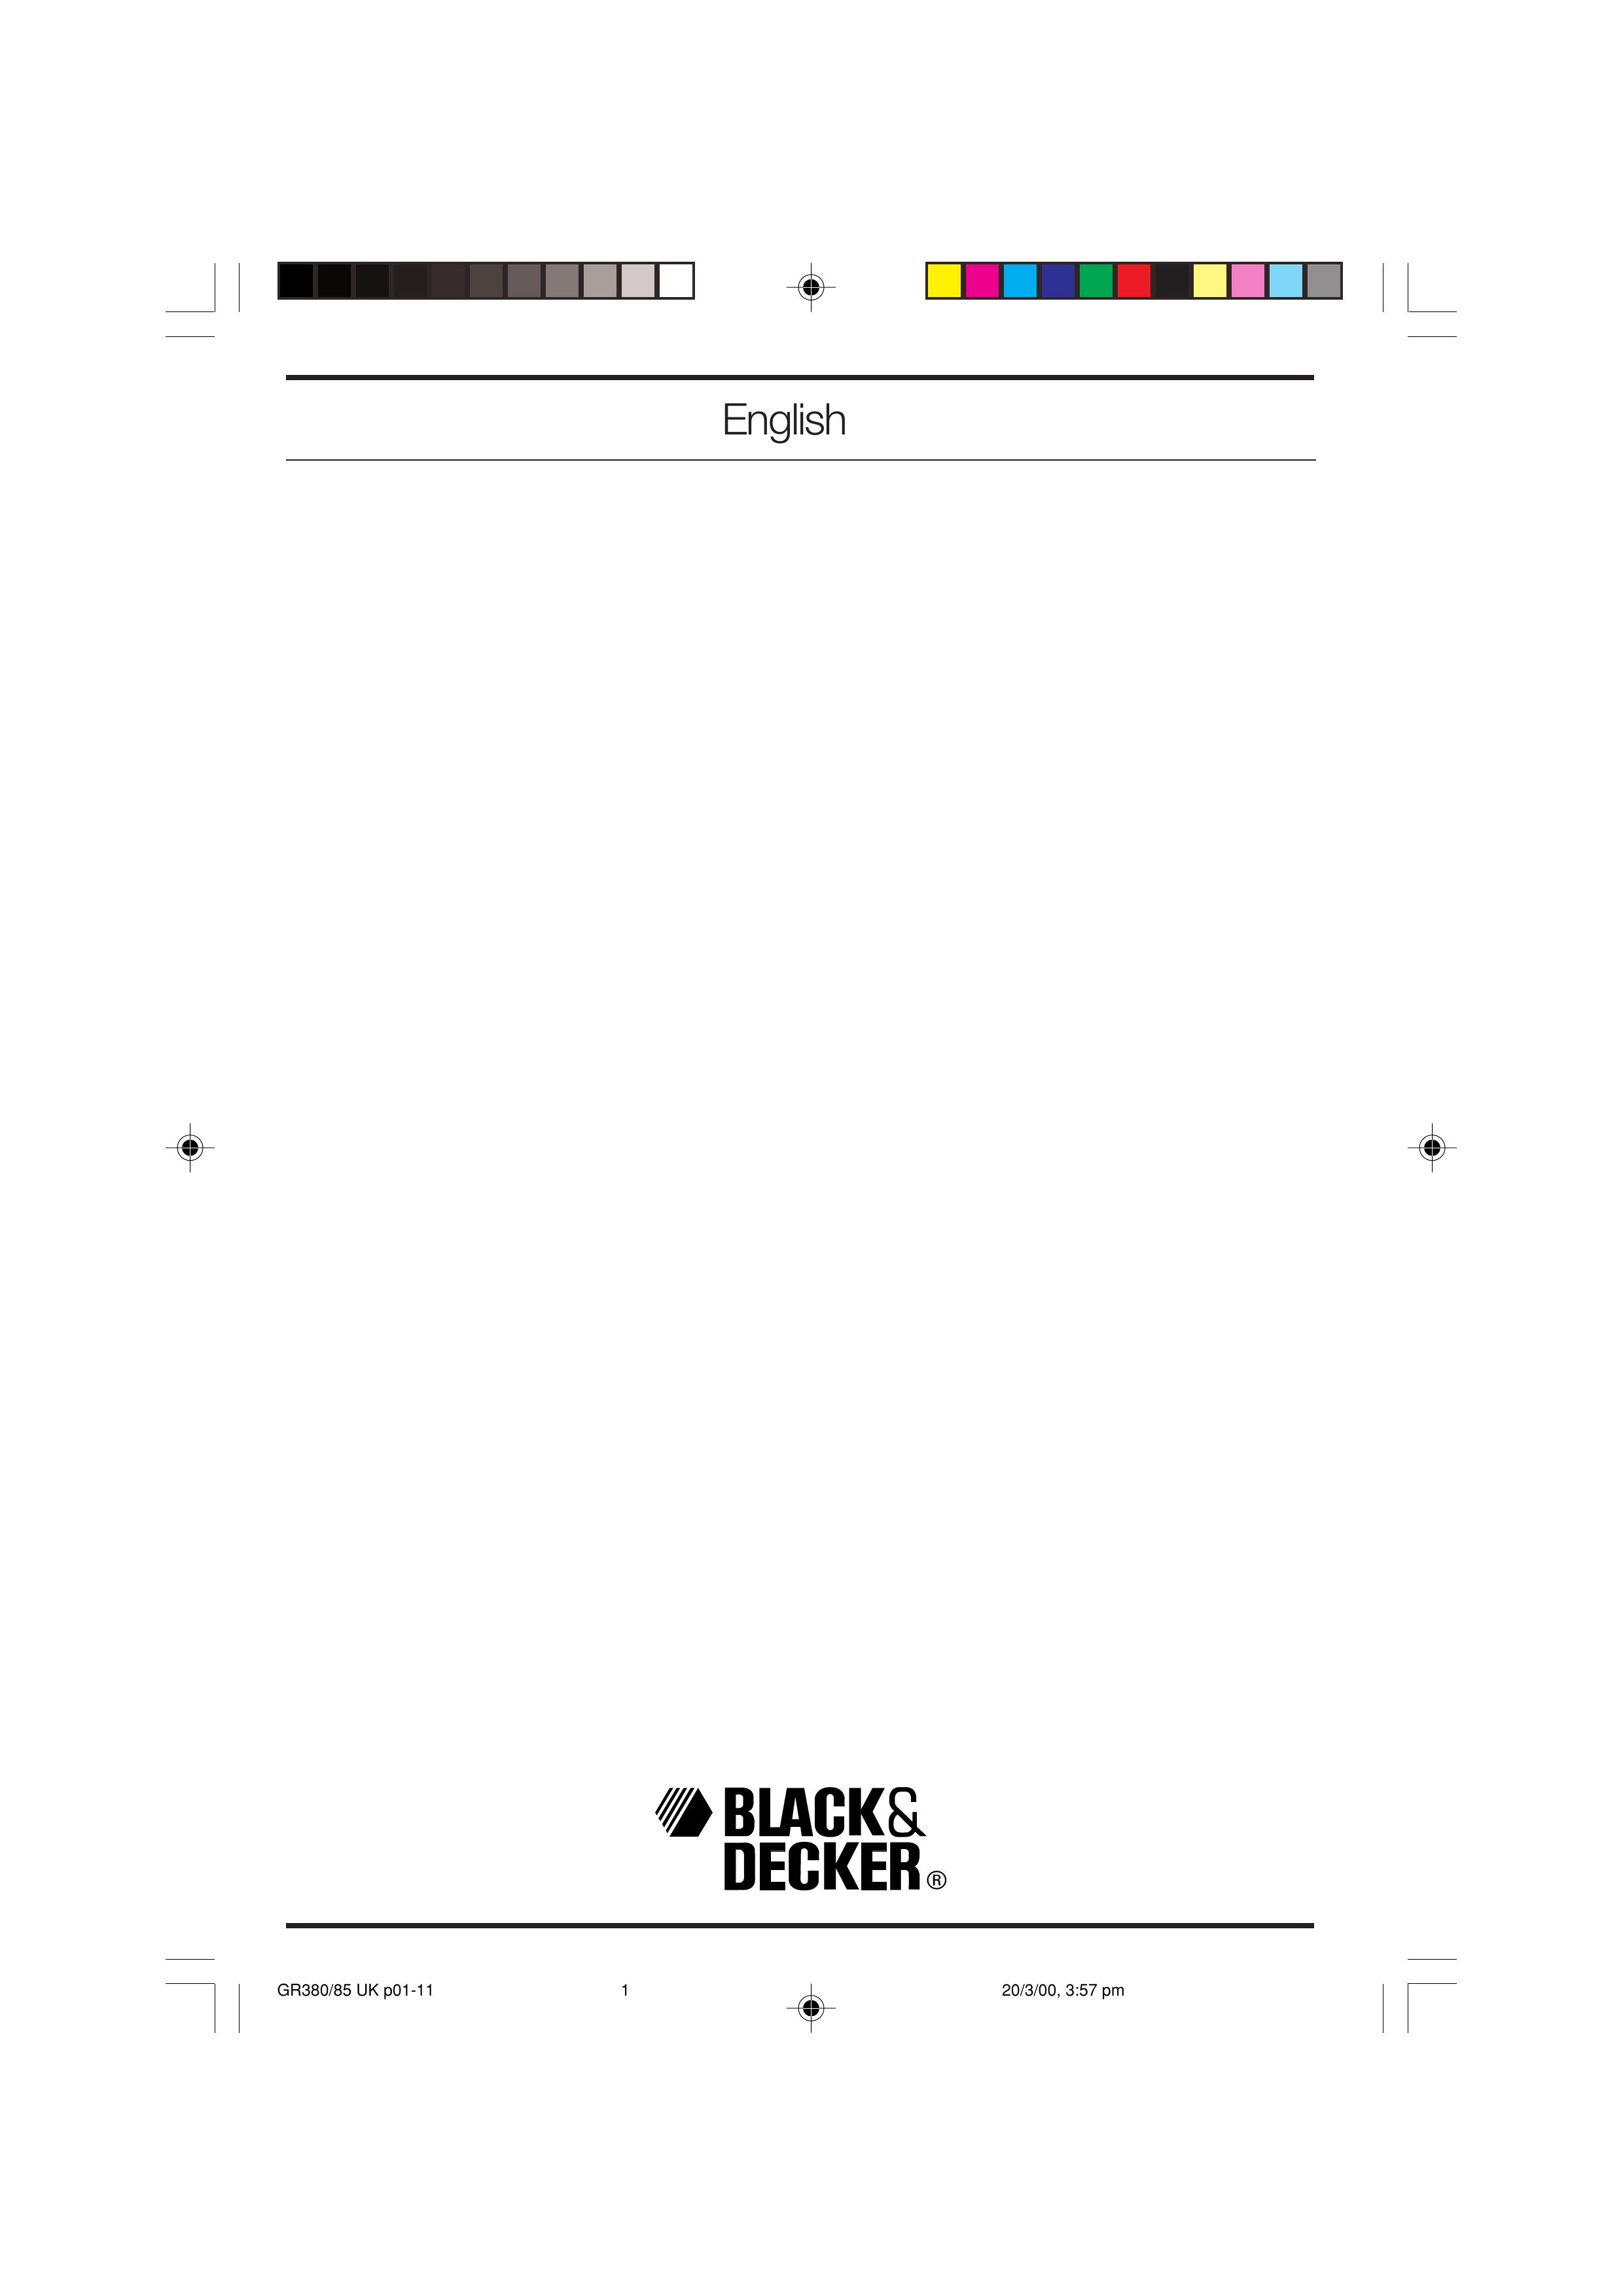 Black & Decker GR380/85 Lawn Mower User Manual